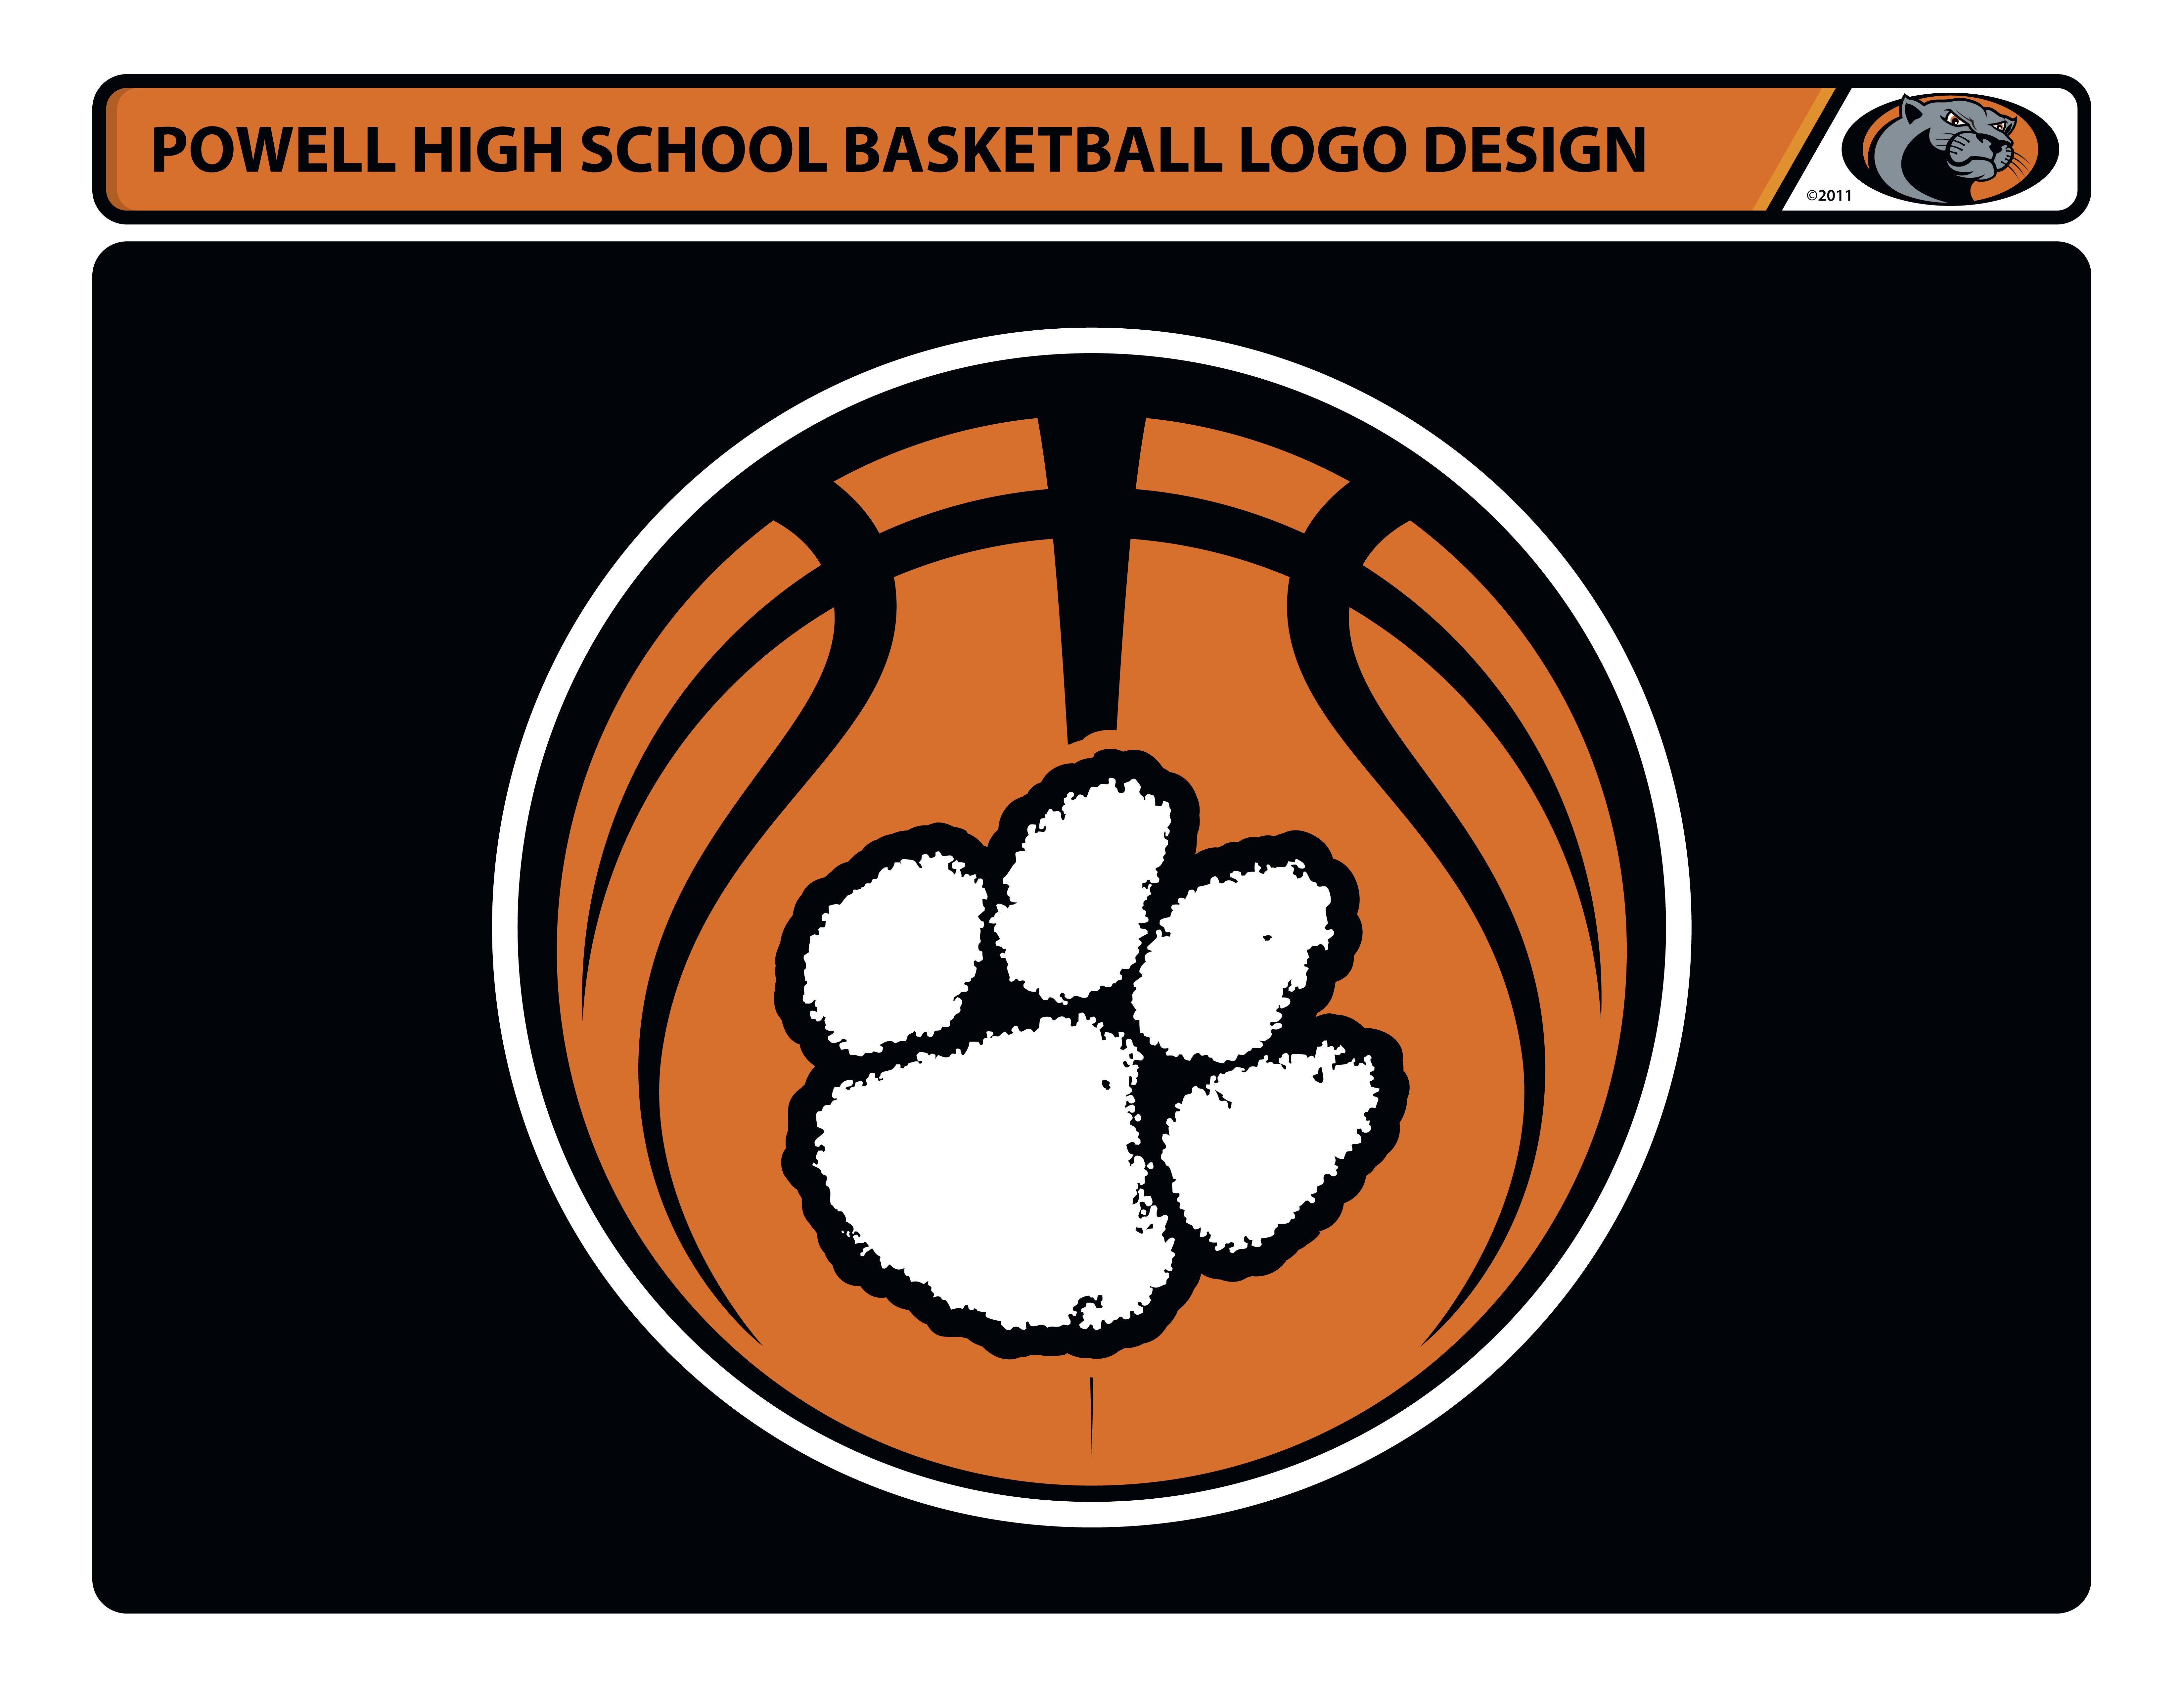 School Basketball Logo - Powell High School Basketball Logo Design | Digital Portfolio